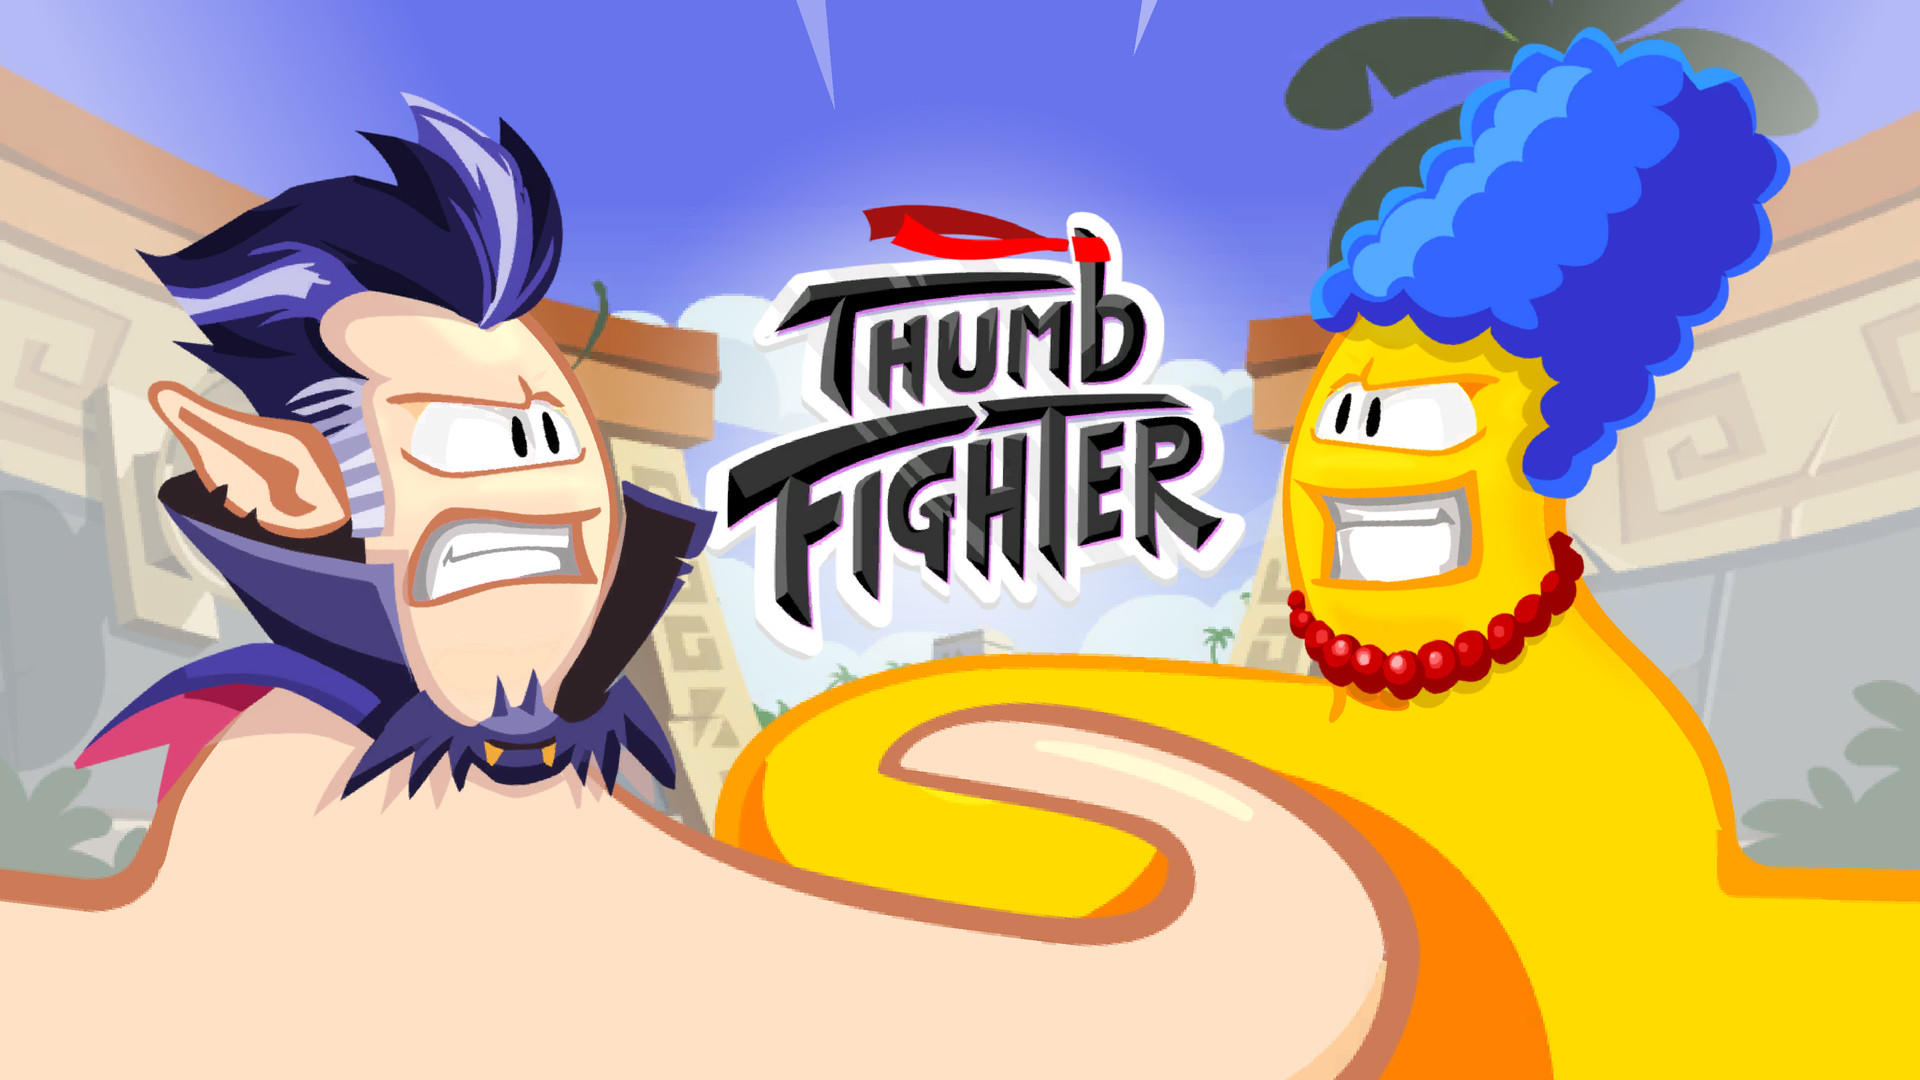 Thumb Fighter遊戲截圖